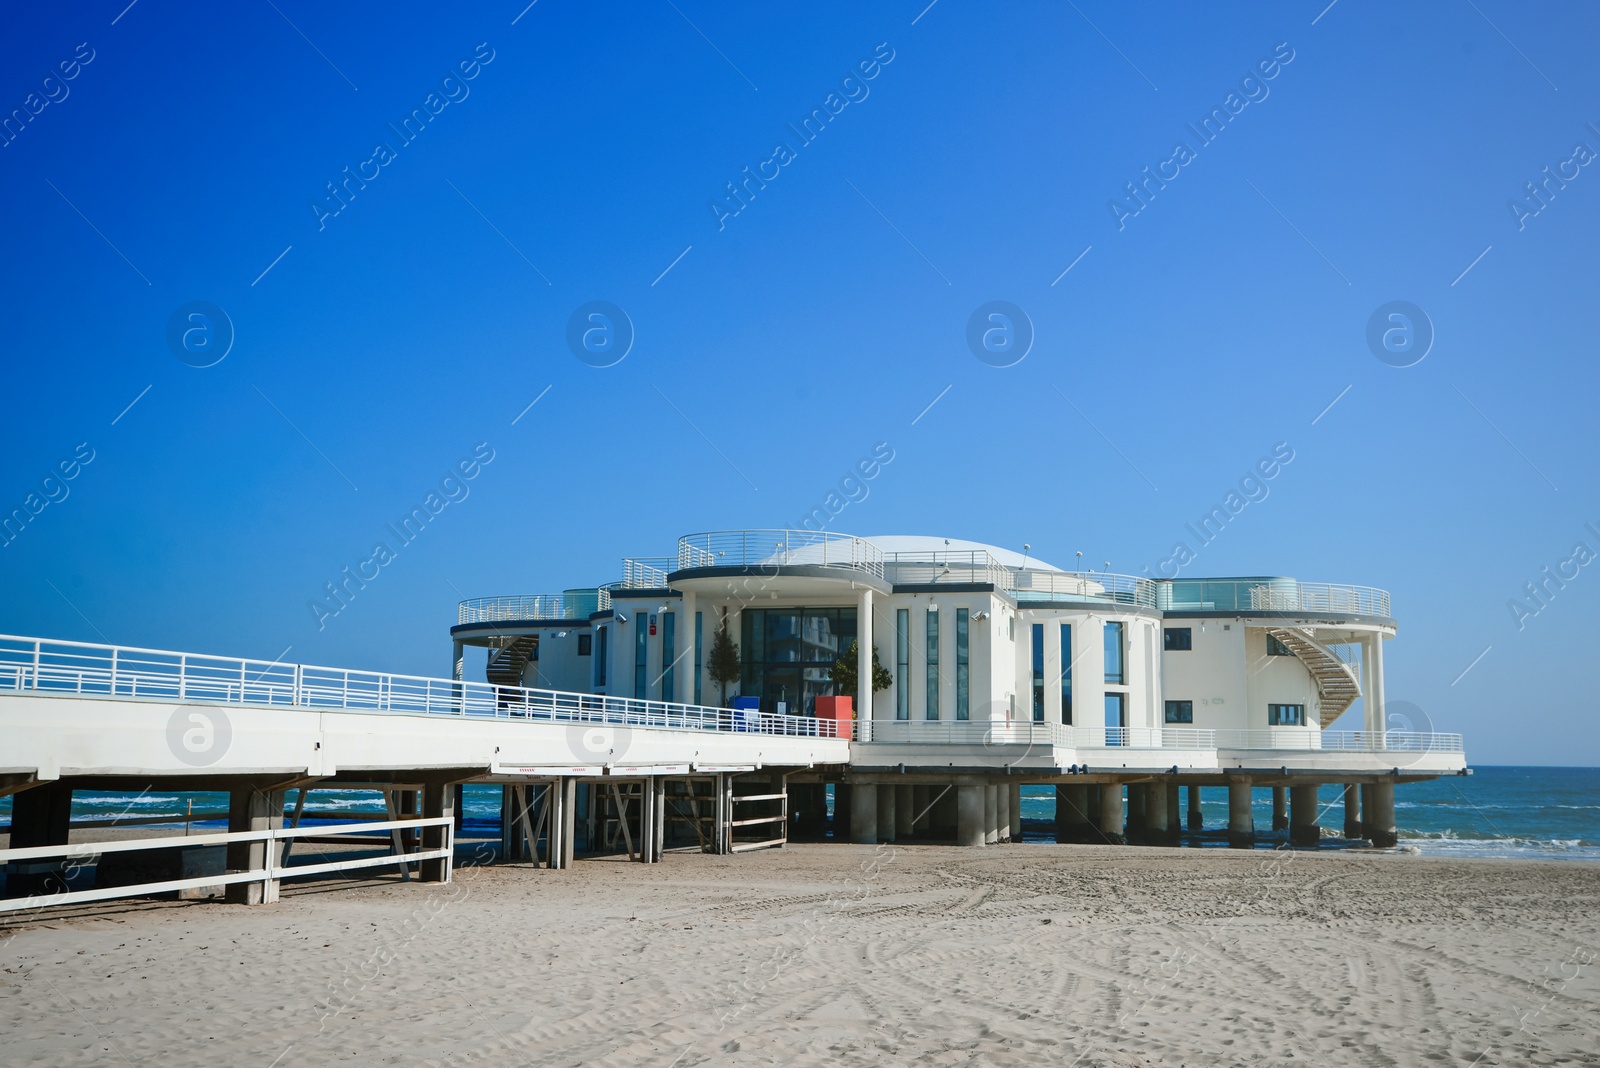 Photo of View of white rotonda and pier on sea shore